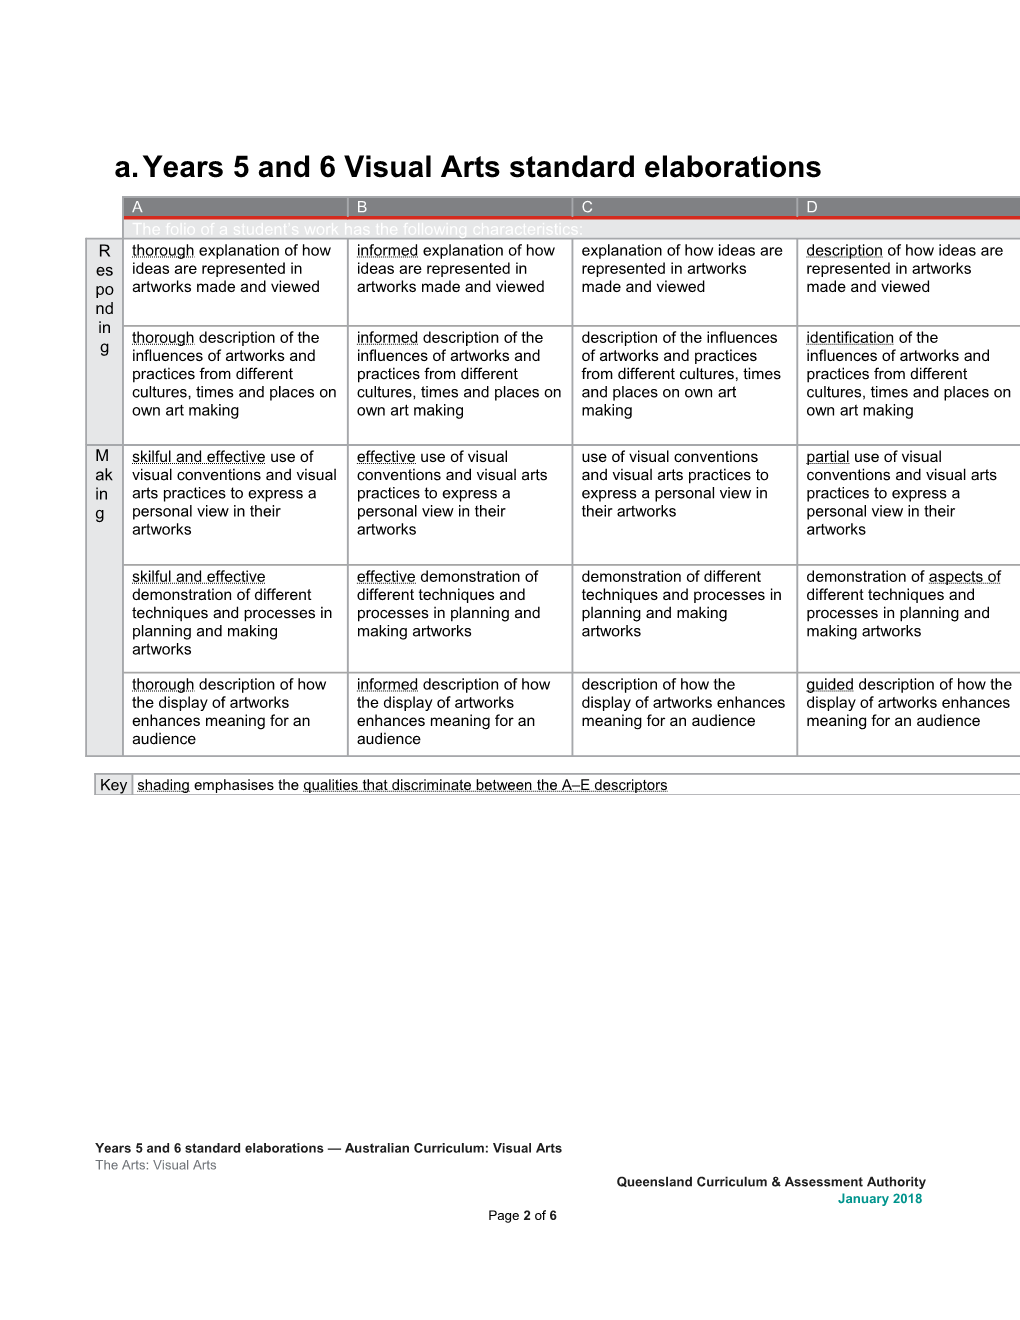 Years 5 and 6 Standard Elaborations Australian Curriculum: Visual Arts